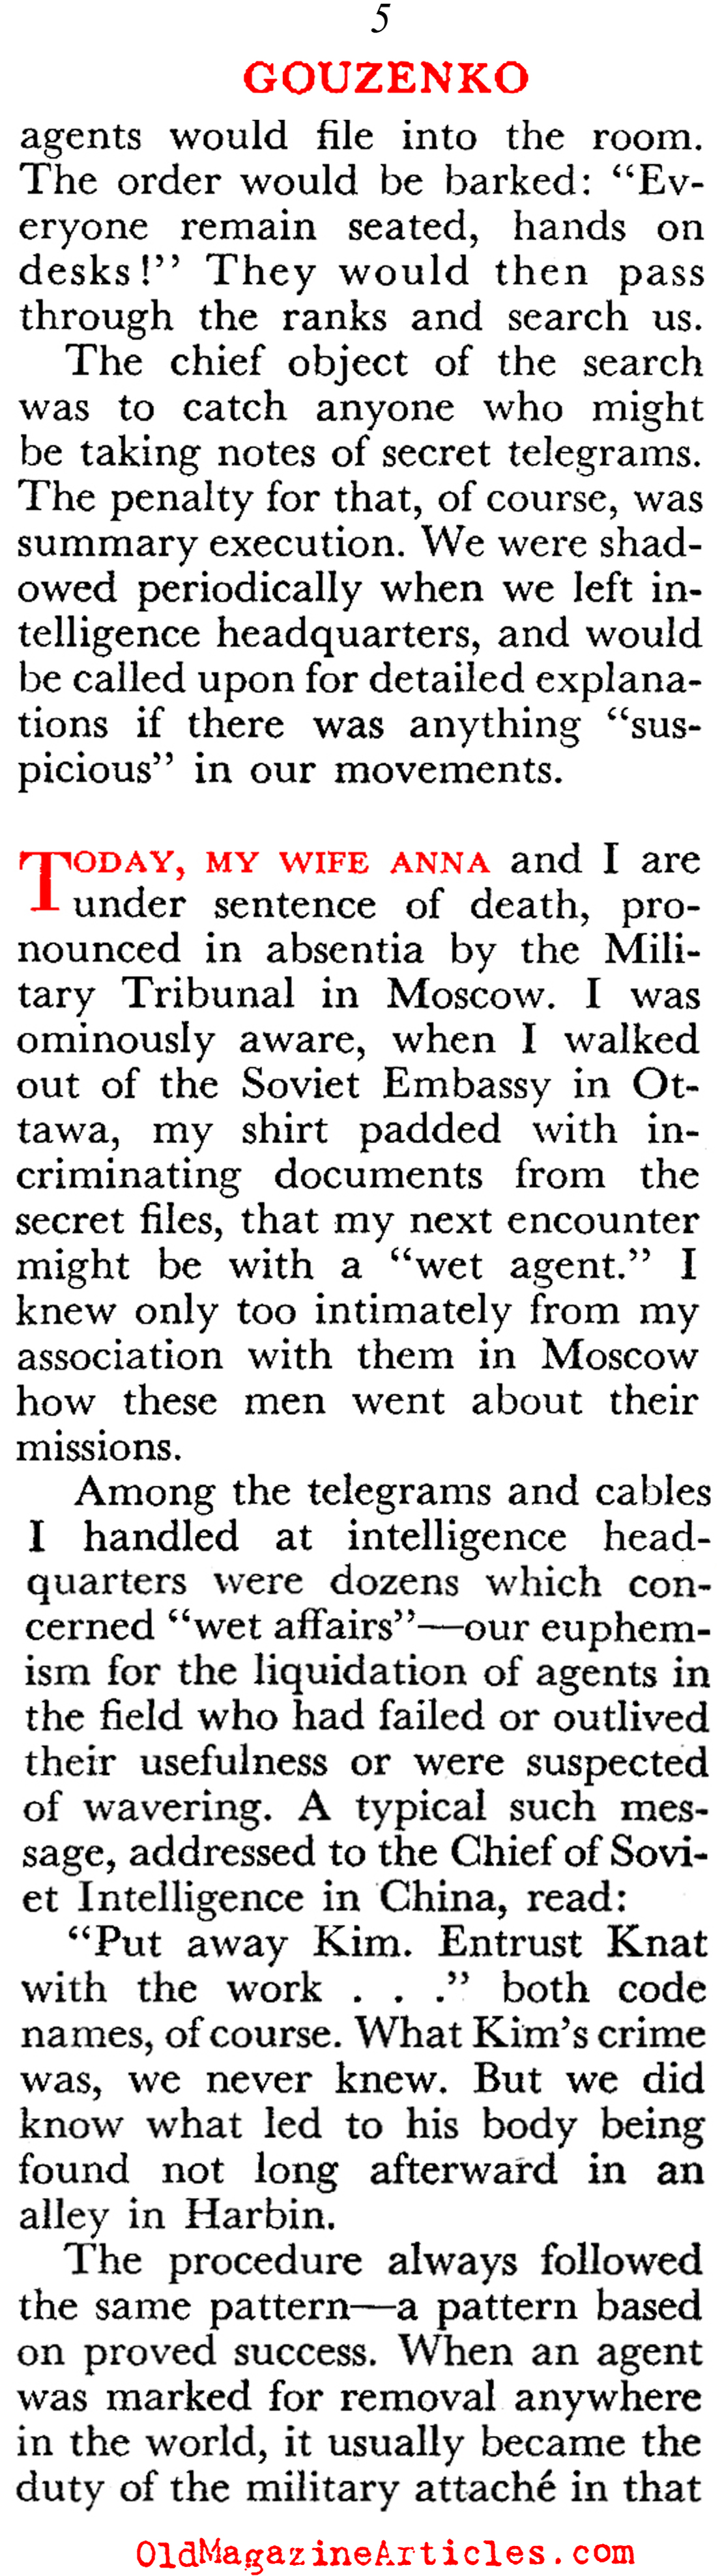 The Cold War Began with Igor Gouzenko (Coronet Magazine, 1953)